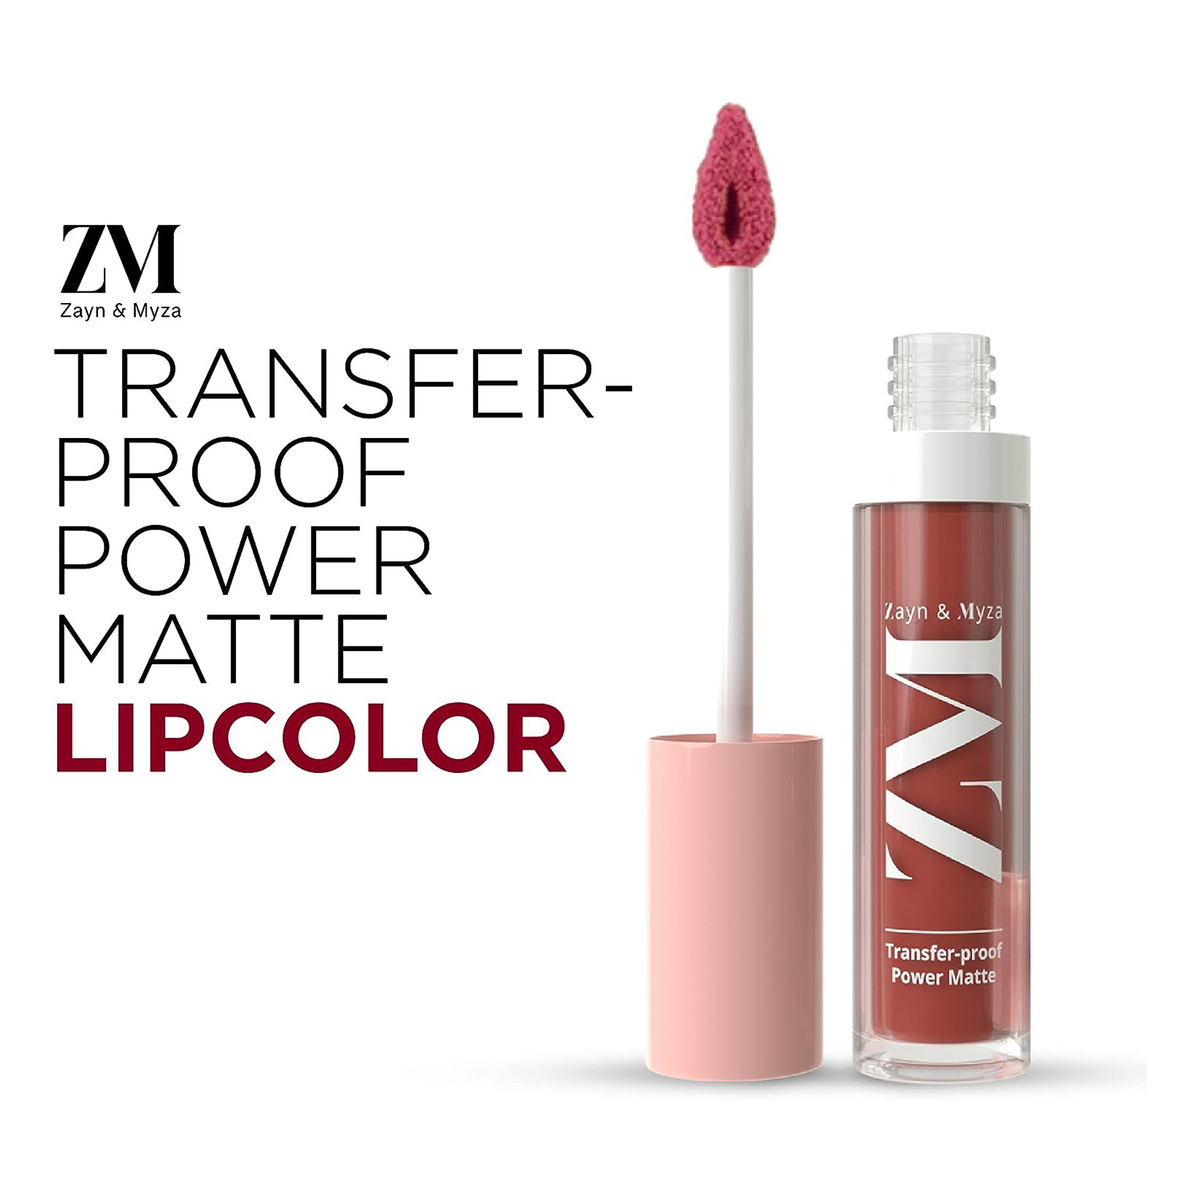 Zayn & Myza Transfer-Proof Power Matte Finish Lip Color, Rose Wood Nude, 6 ml